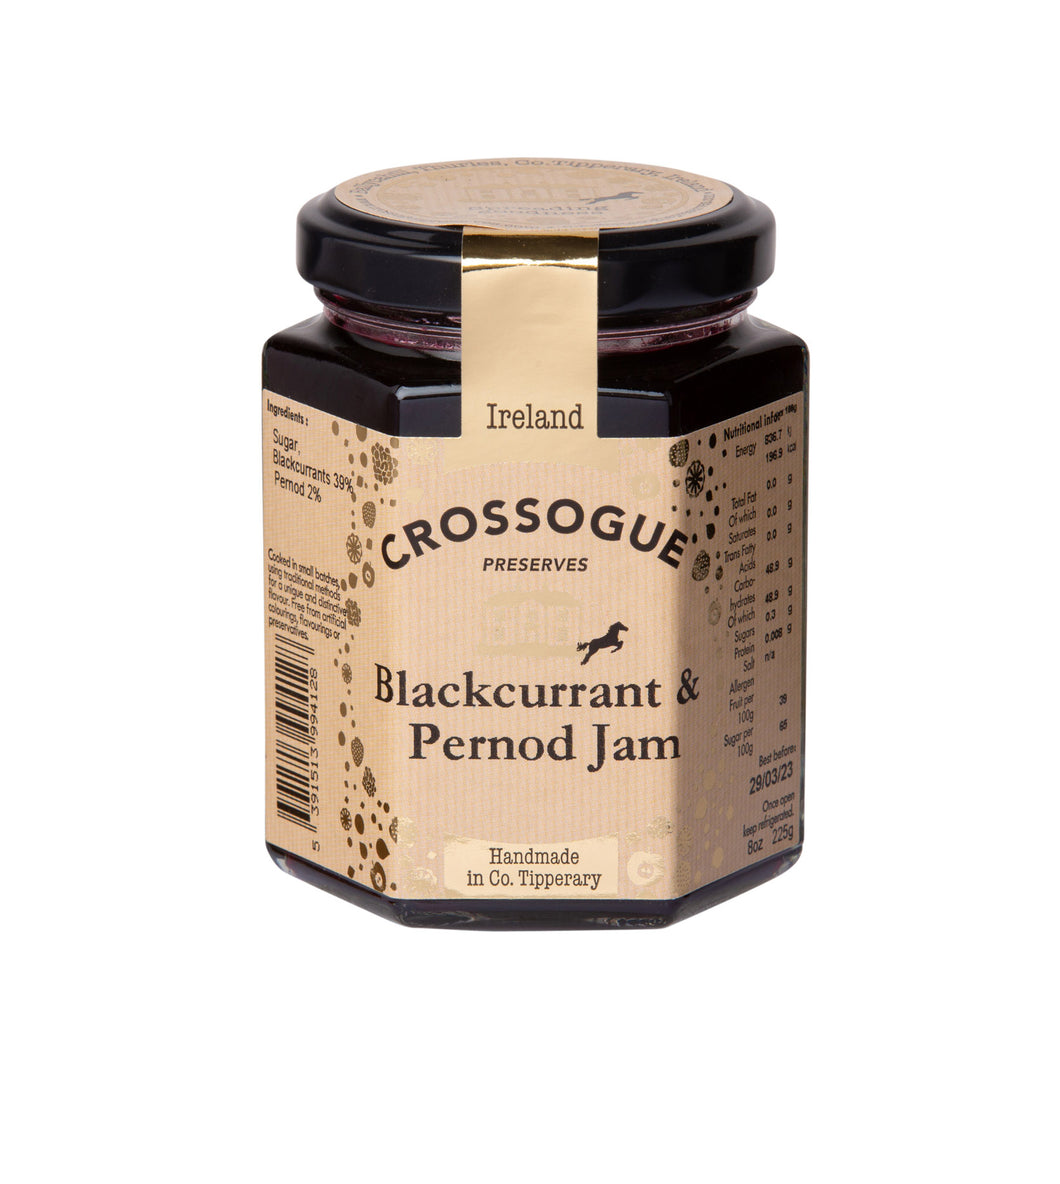 Blackcurrant & Pernod Jam